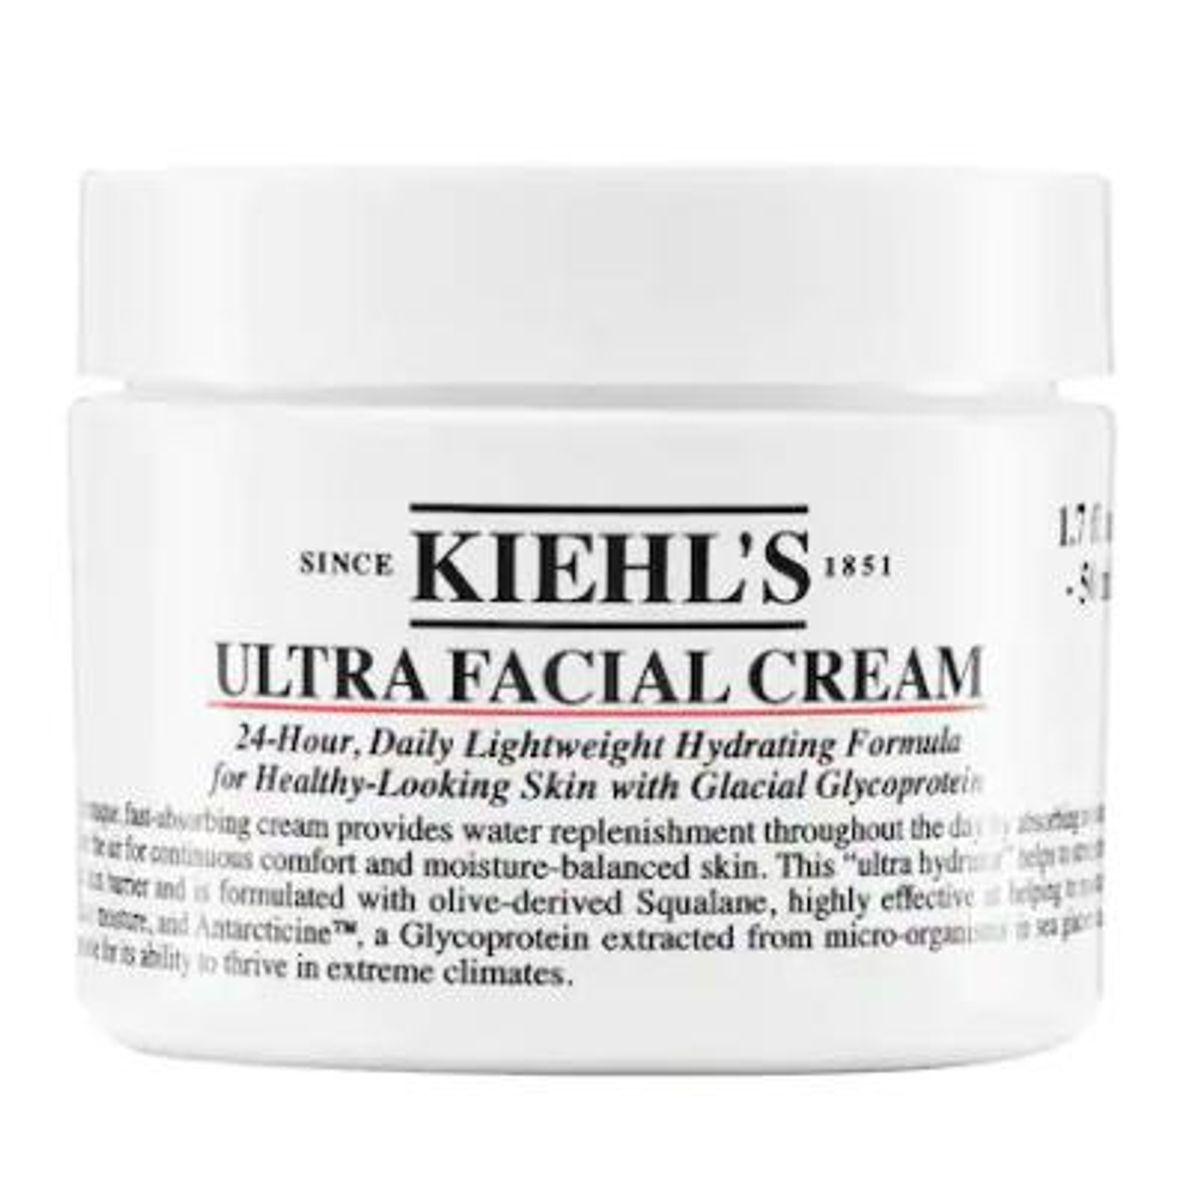 kiehls ultra facial moisturizing cream with squalane